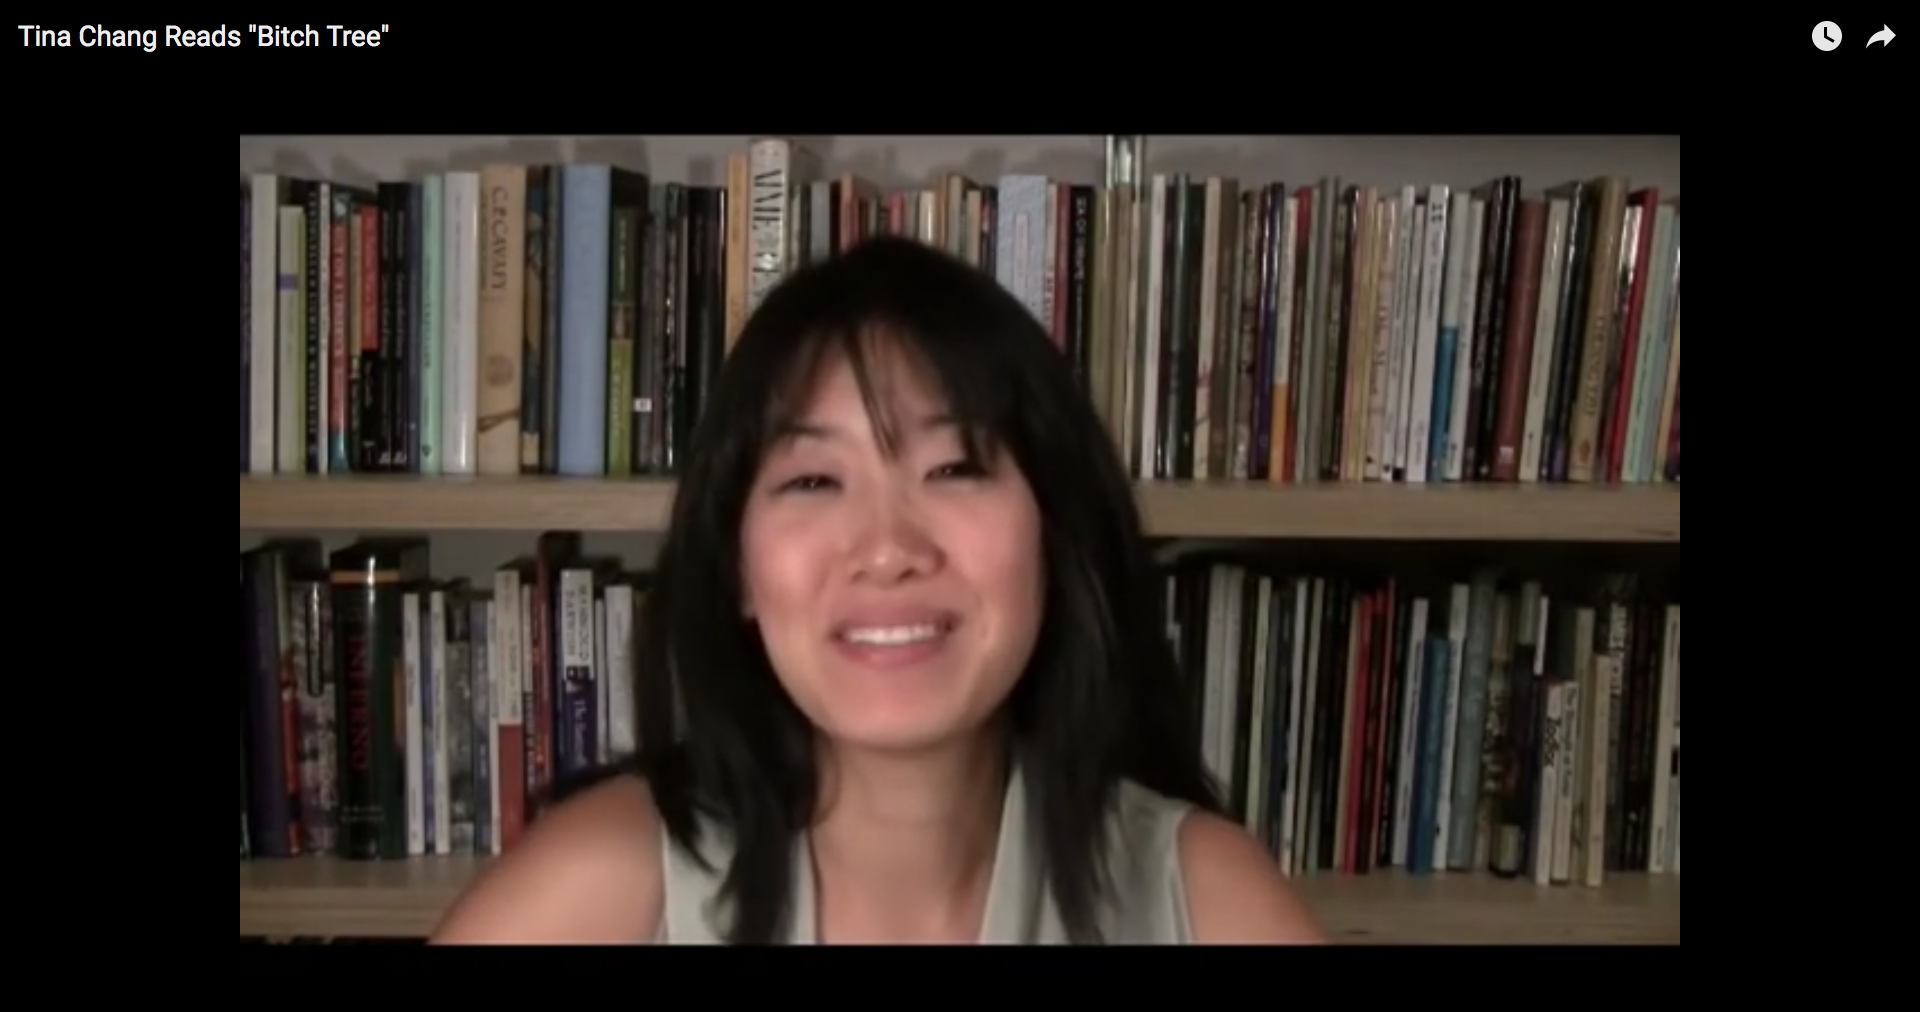 Tina Chang reads "Bitch Tree"